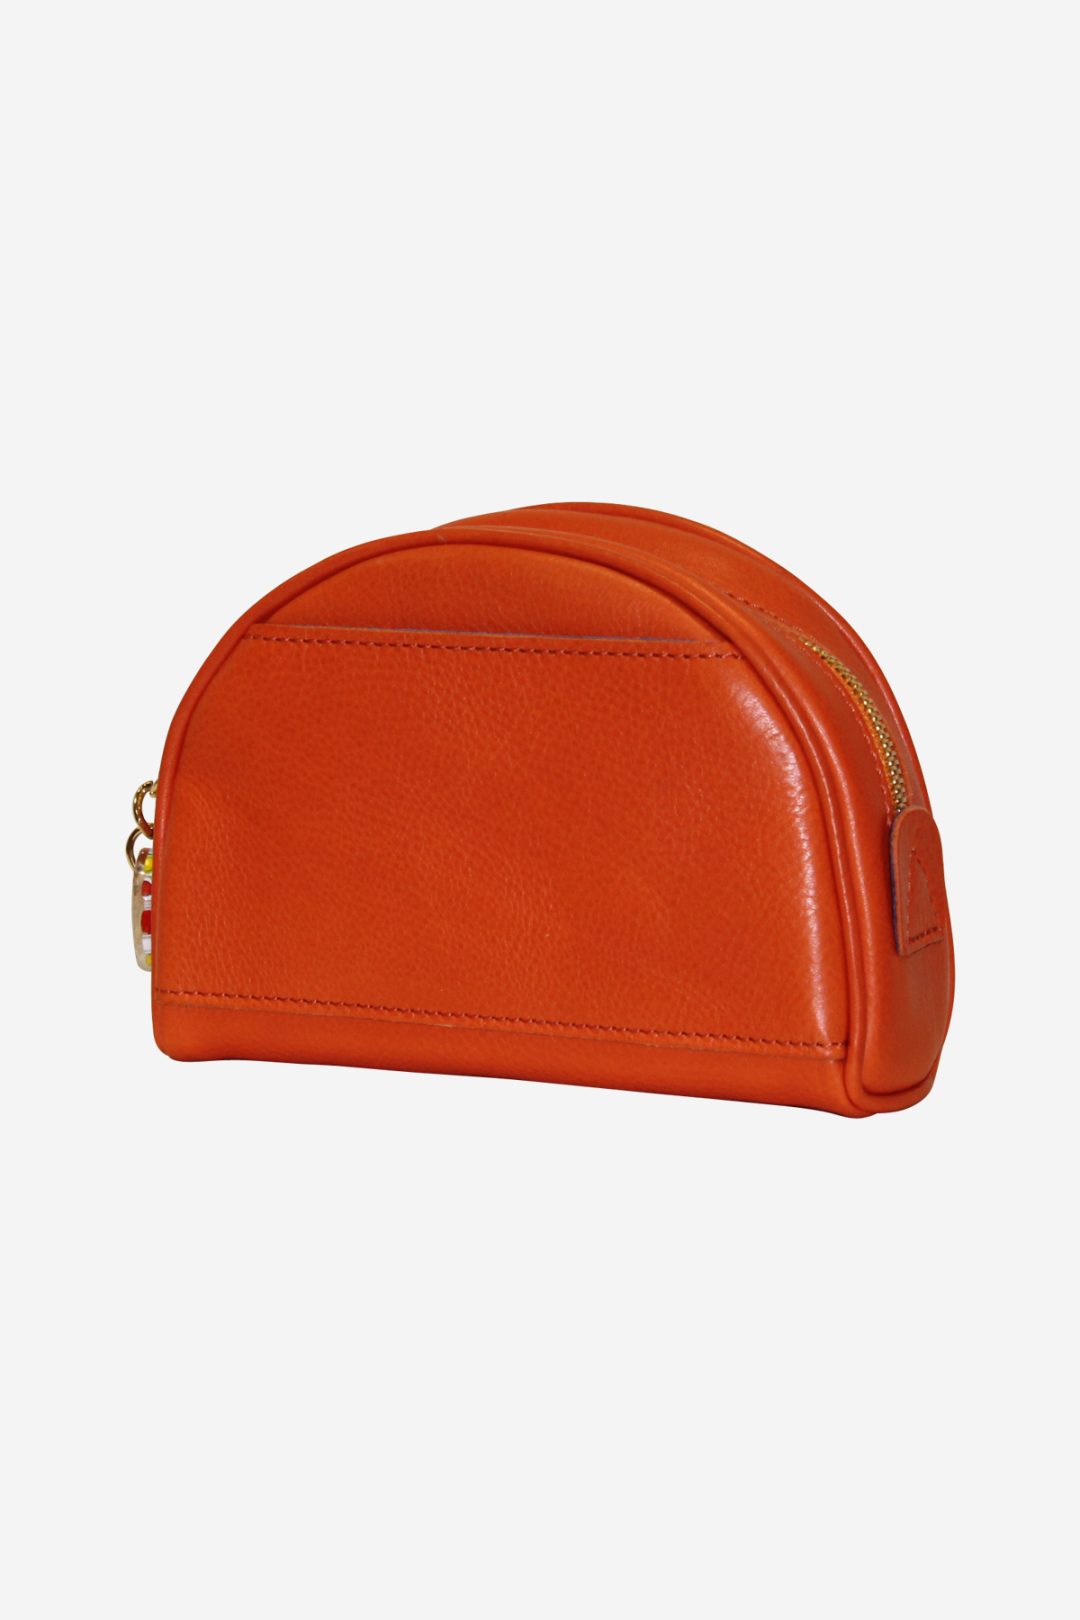 Orange Leather Clutch Bag Handmade // Soft Italian Leather 